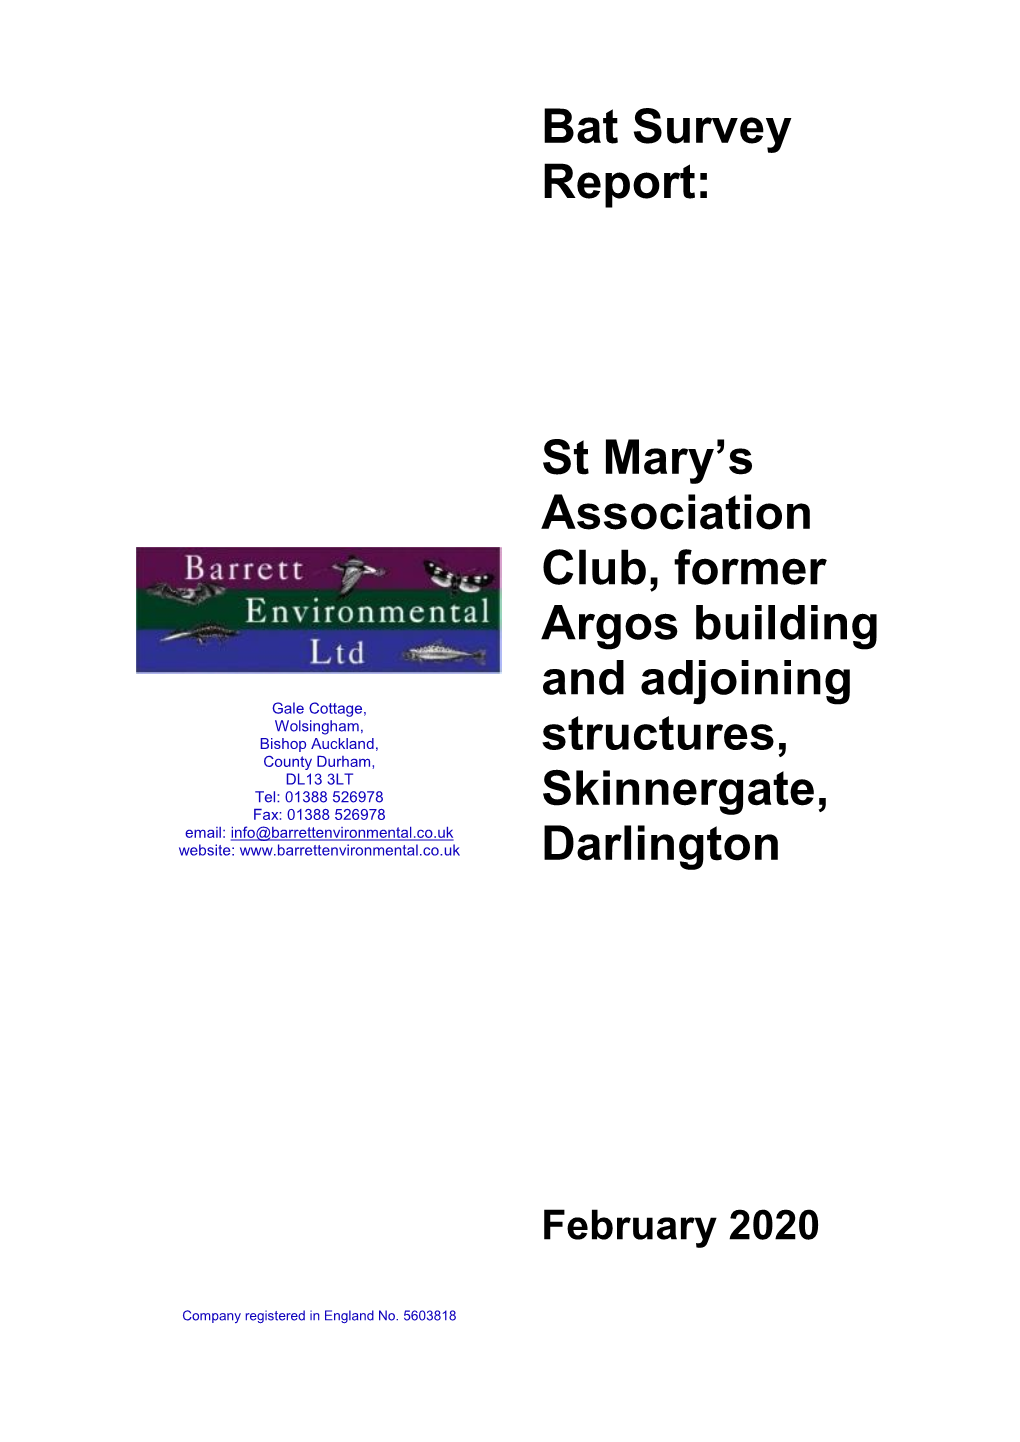 Bat Survey Report Skinnergate, Darlington, February 2020 1 Barrett Environmental Ltd